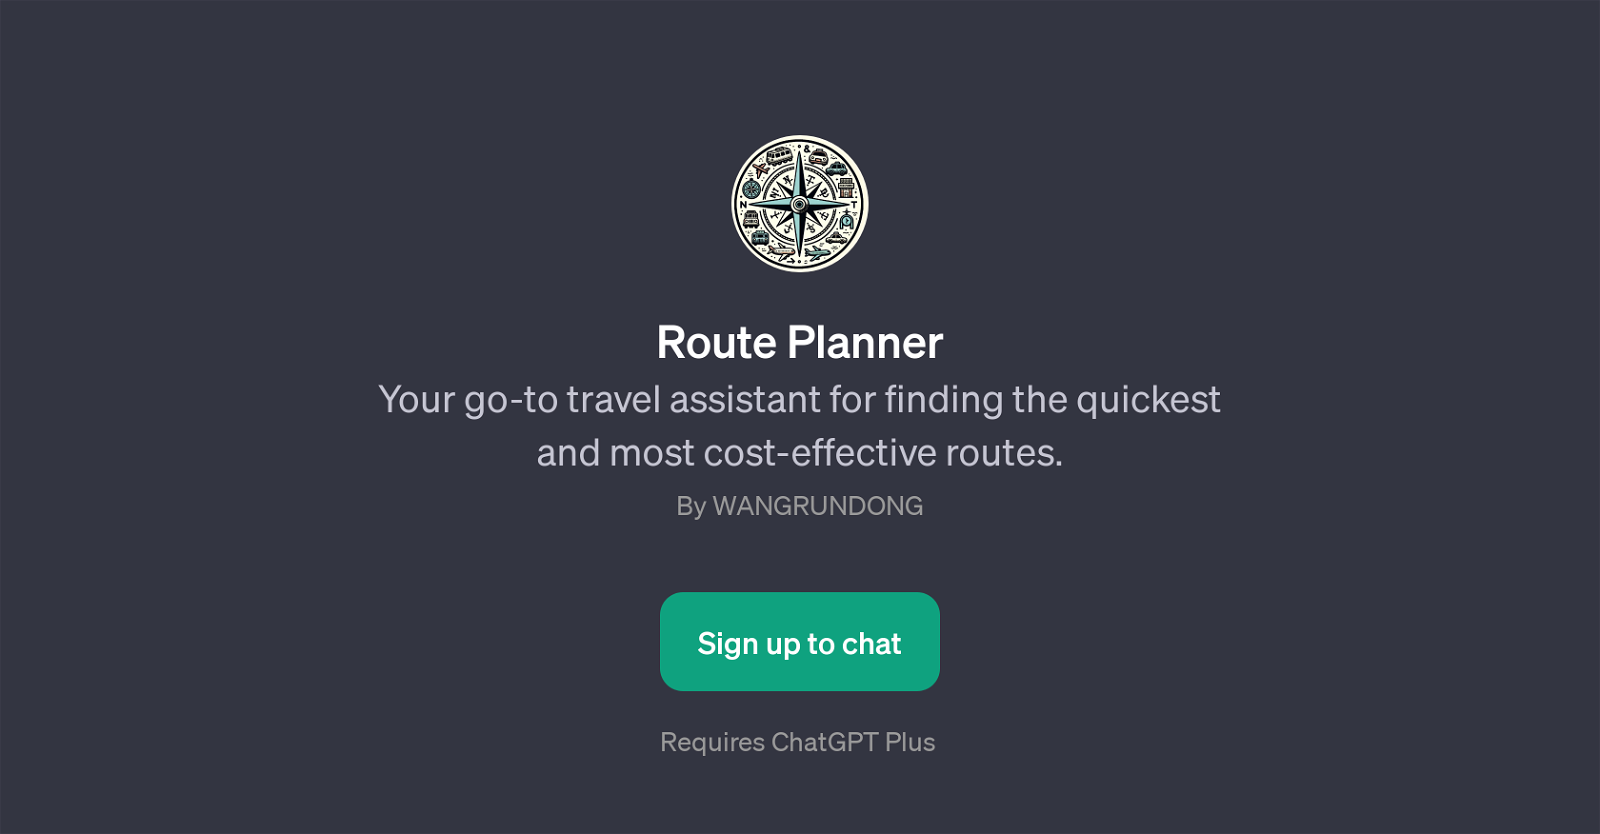 Route Planner website